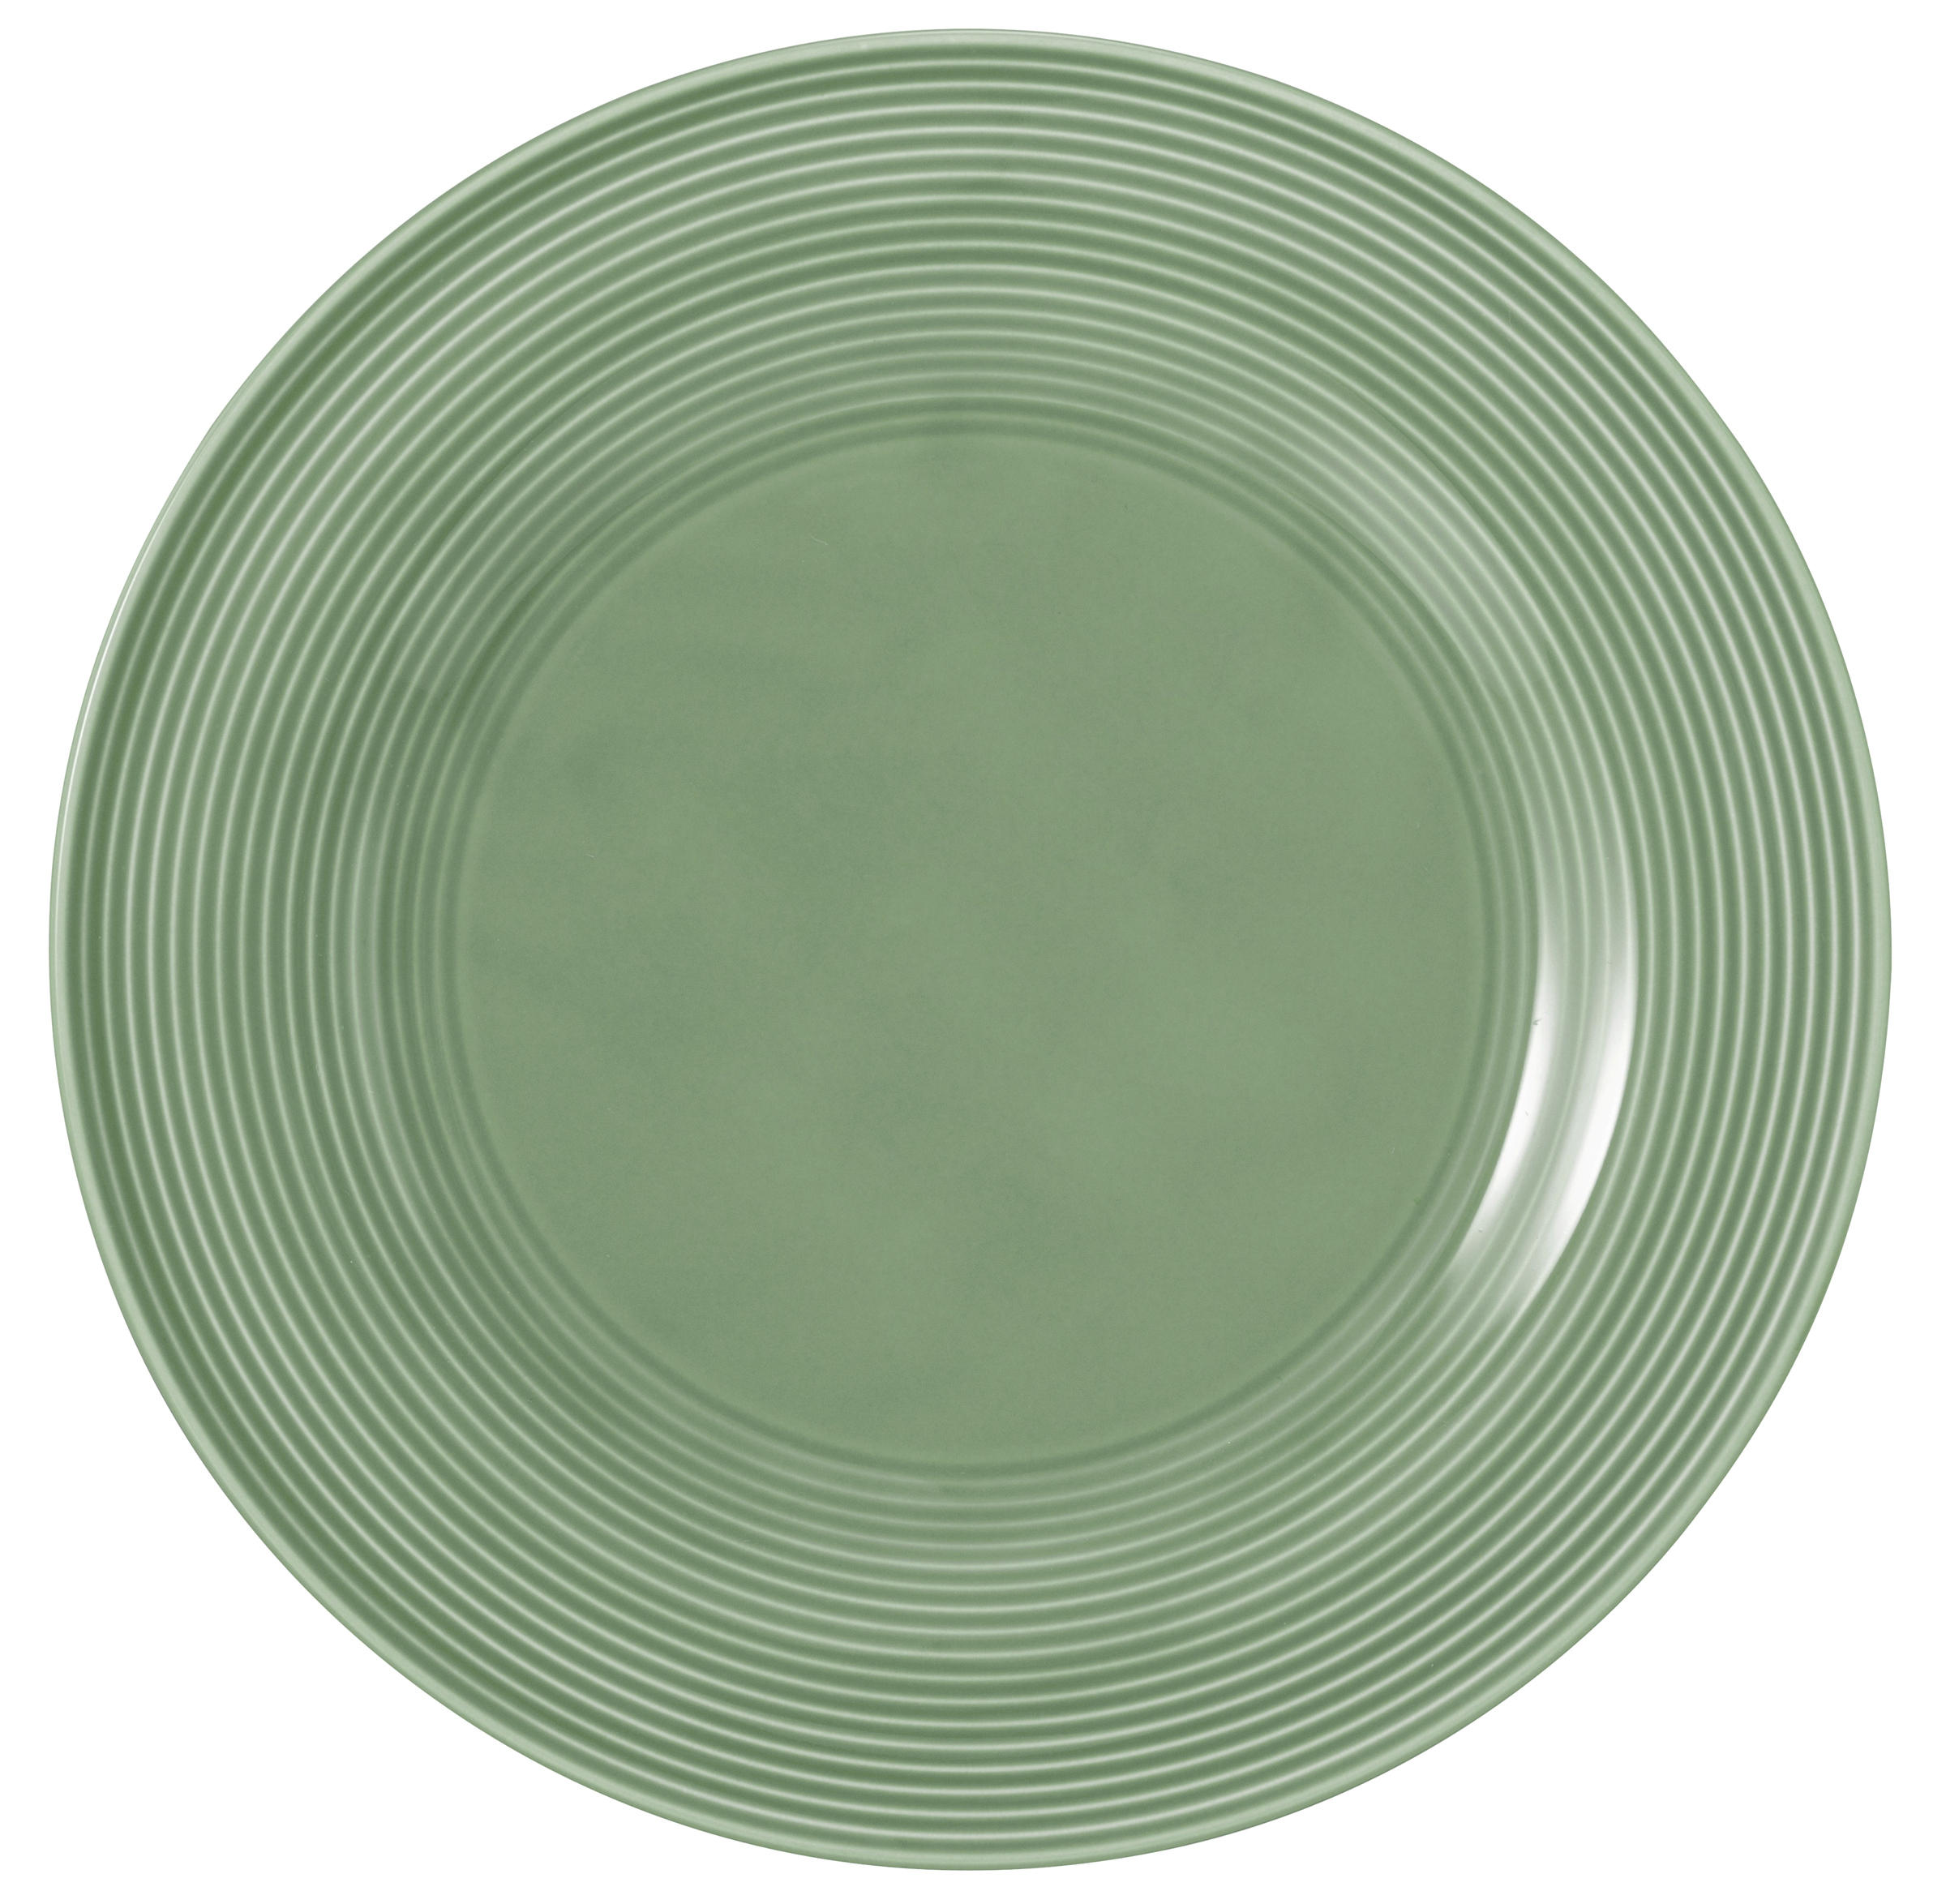 SPEISETELLER Beat salbeigrün uni 27,7 cm  - Mintgrün, LIFESTYLE, Keramik (27,7cm) - Seltmann Weiden